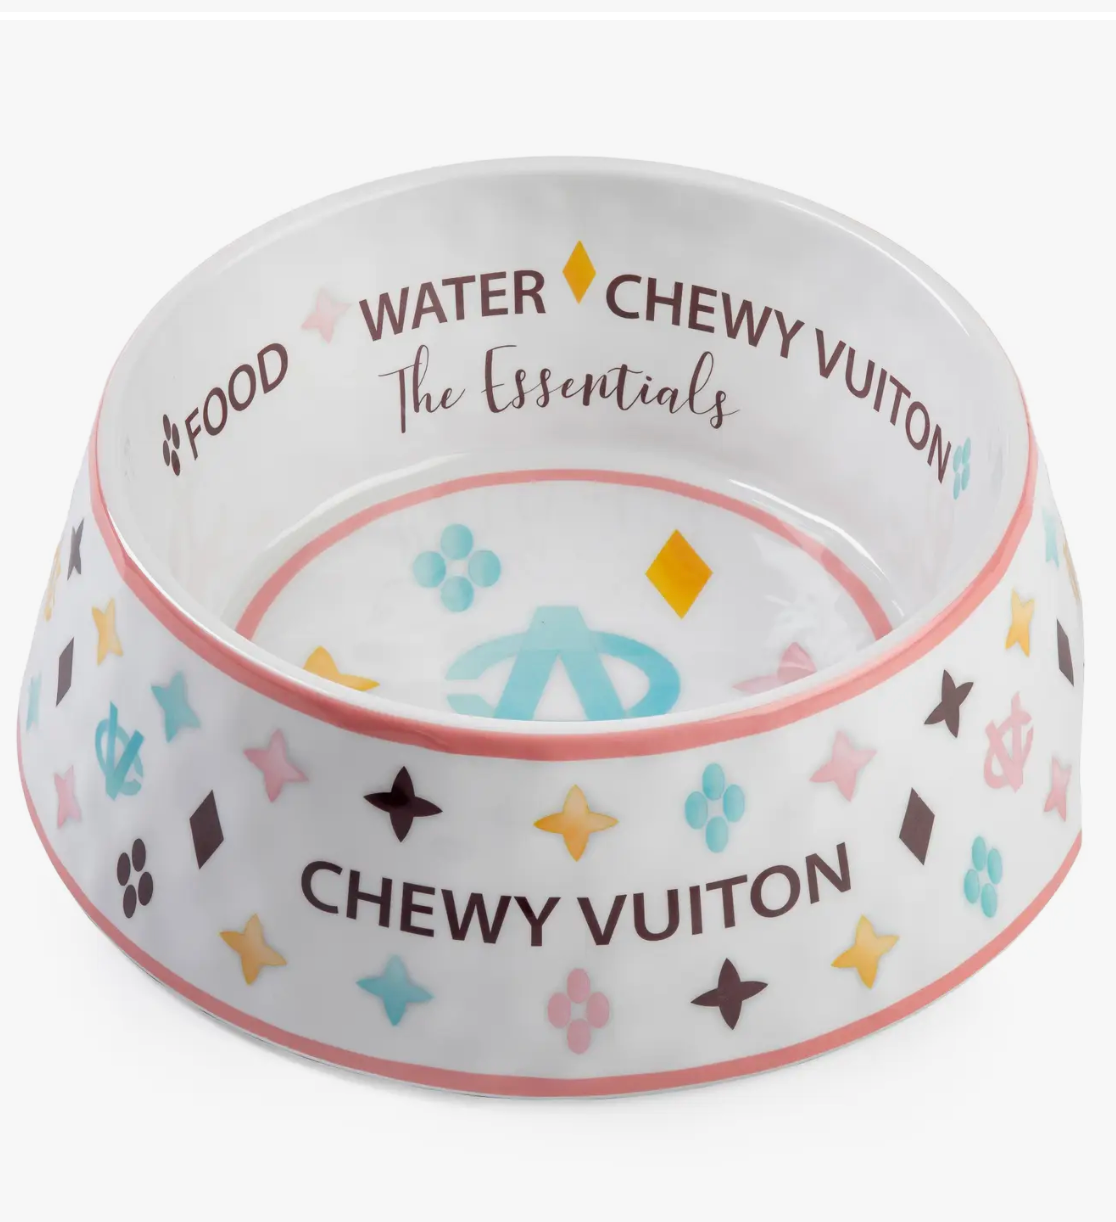 White Chewy Vuiton Dog Food Bowl